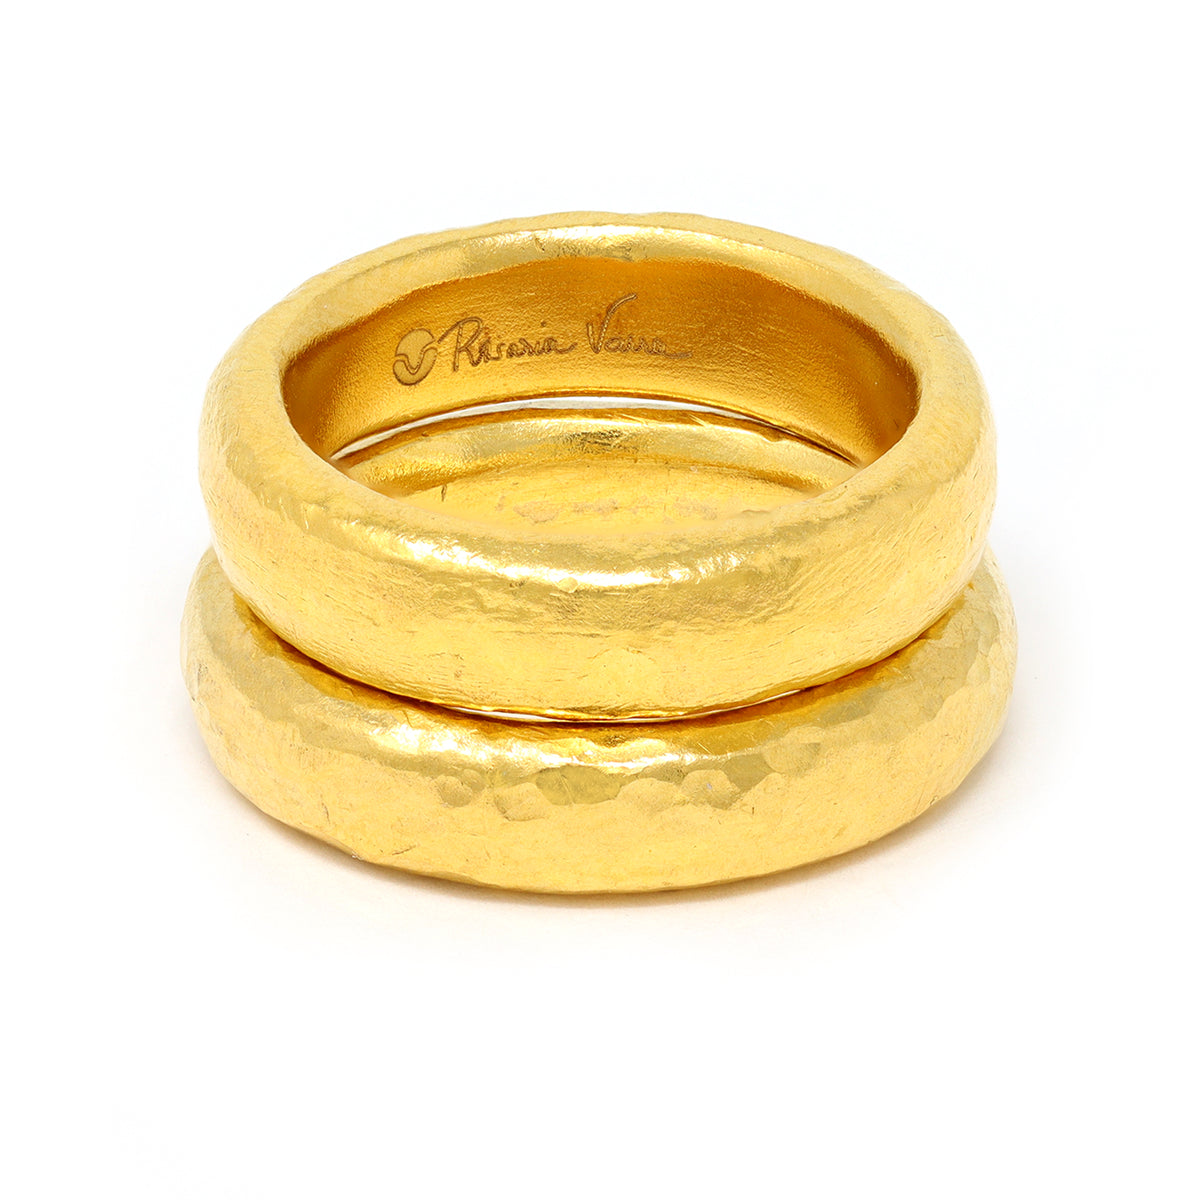 A Pair of Rosaria Varra 24 Karat Gold Handmade Band Rings stacked view